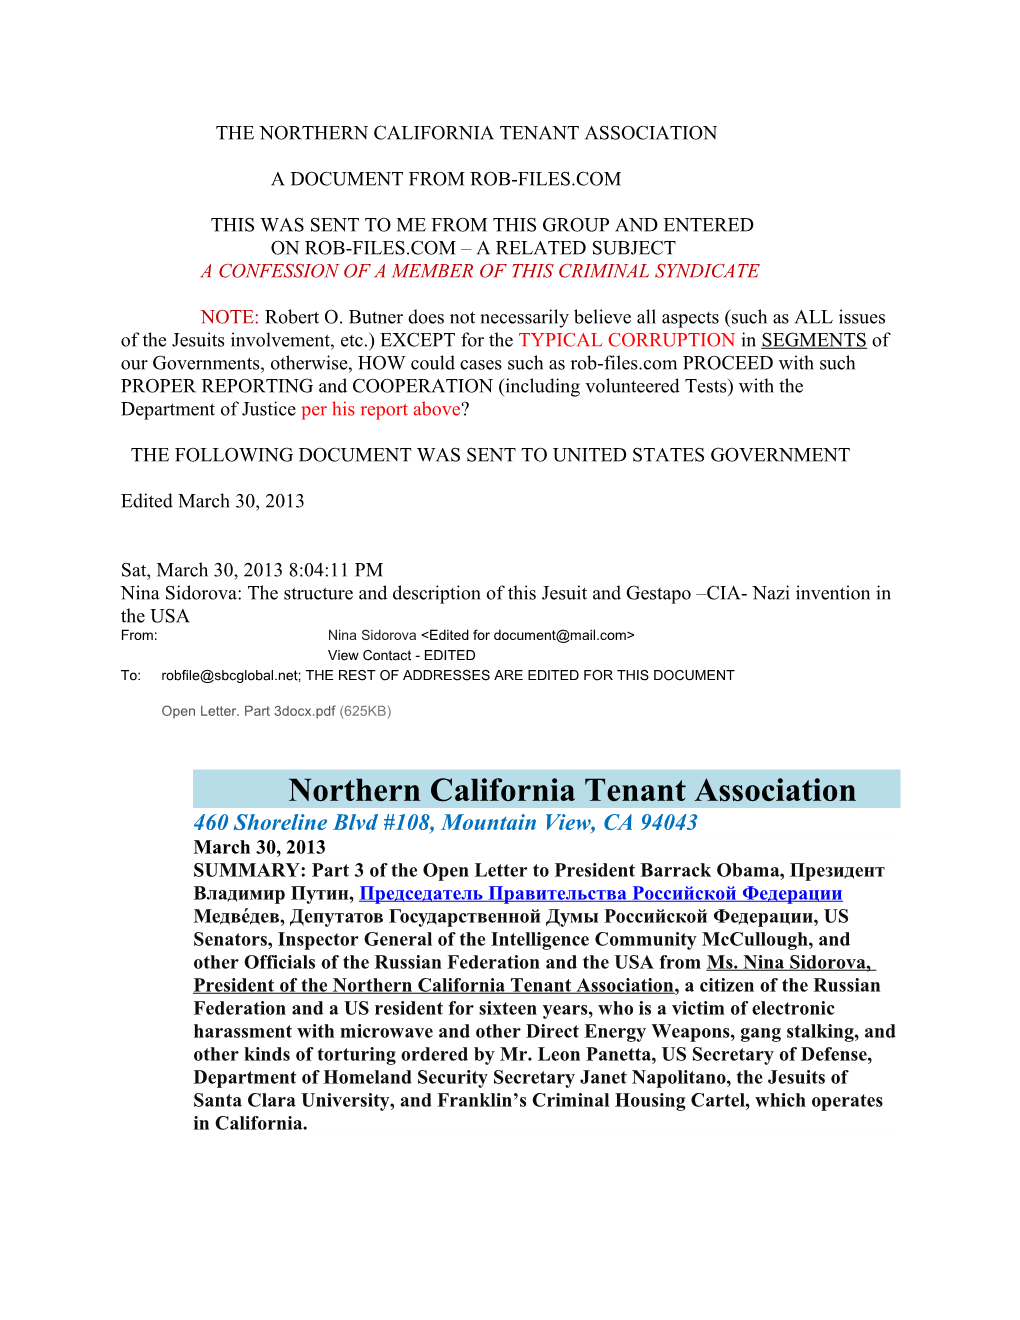 The Northern California Tenant Association